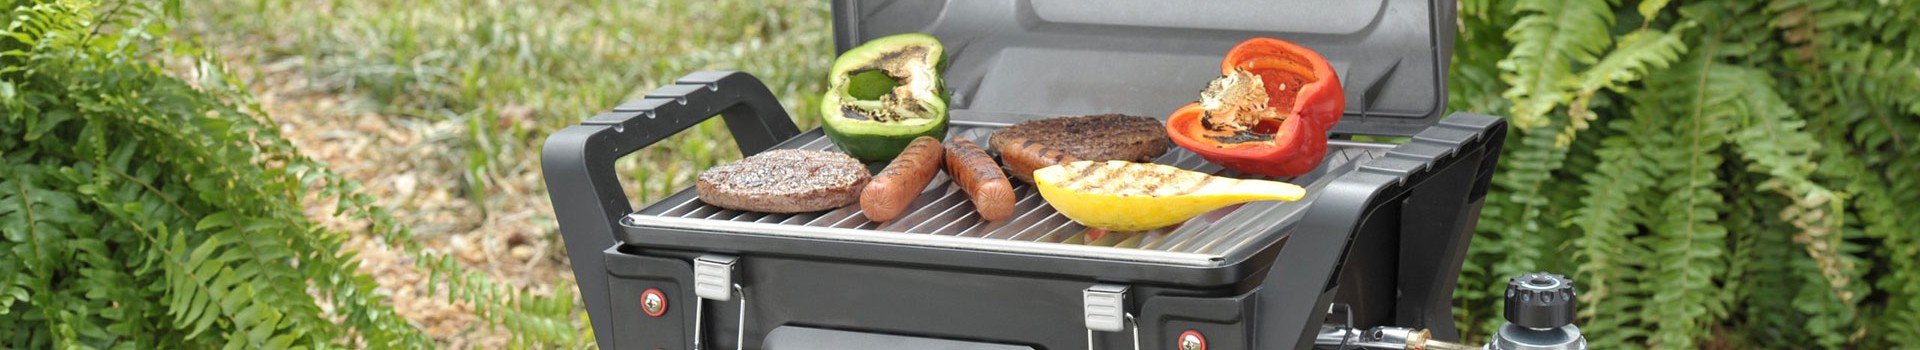 Barbecues portables sur barbecueportugal.com